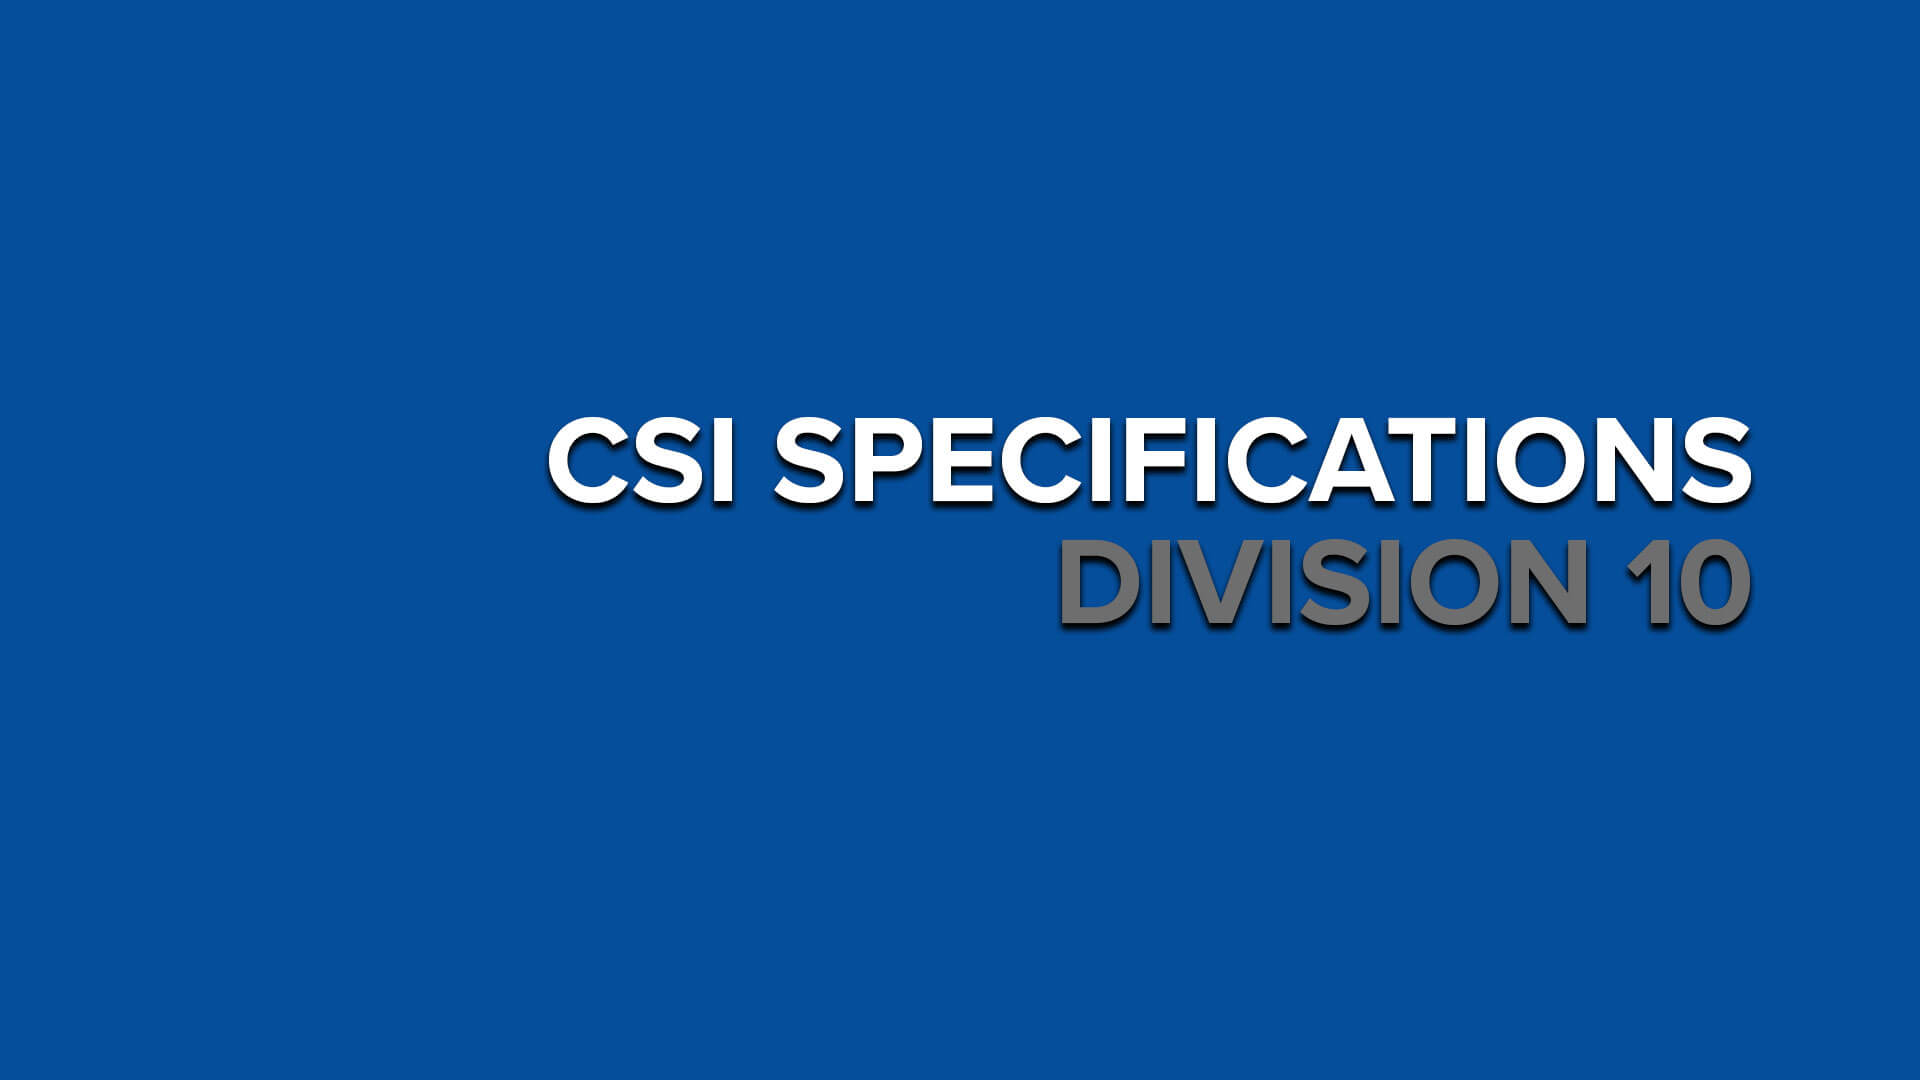 Csi specifications division 10